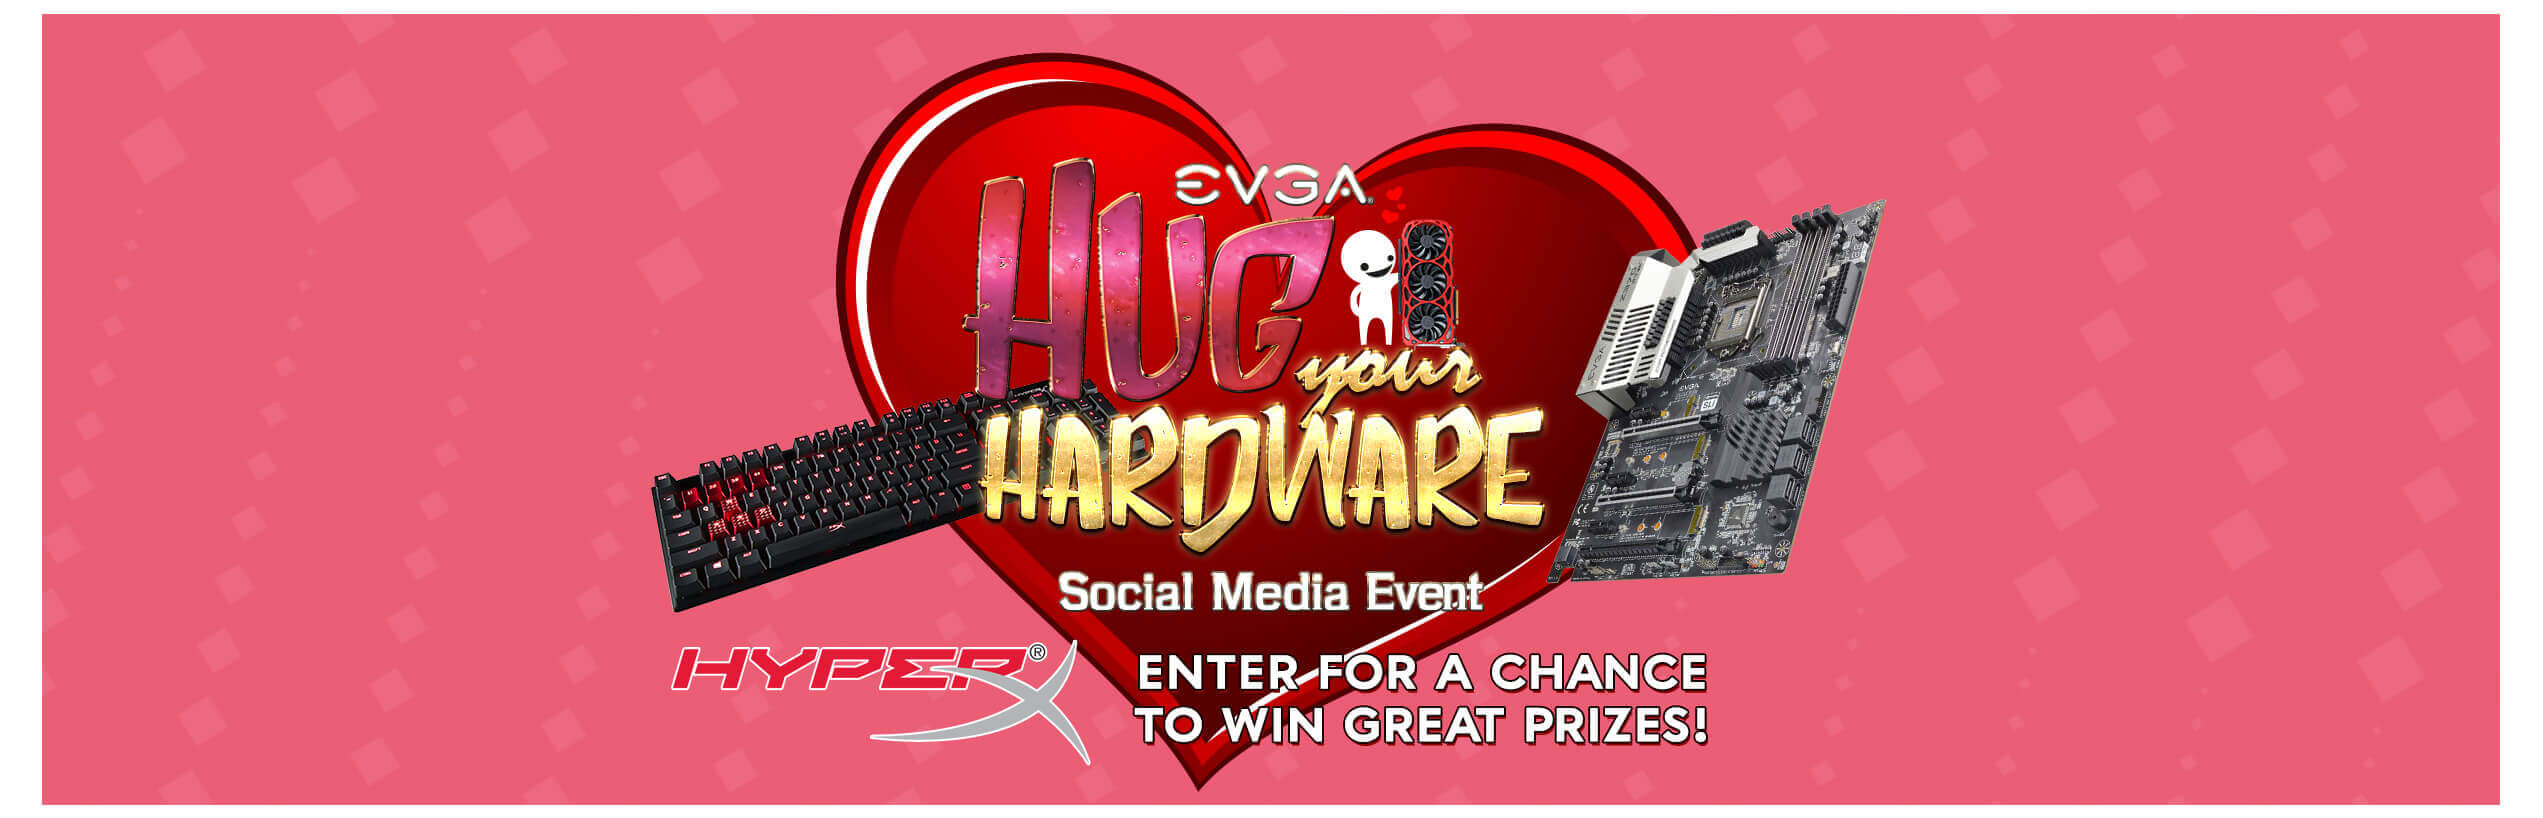 EVGA Hug Your Hardware Social Media Event